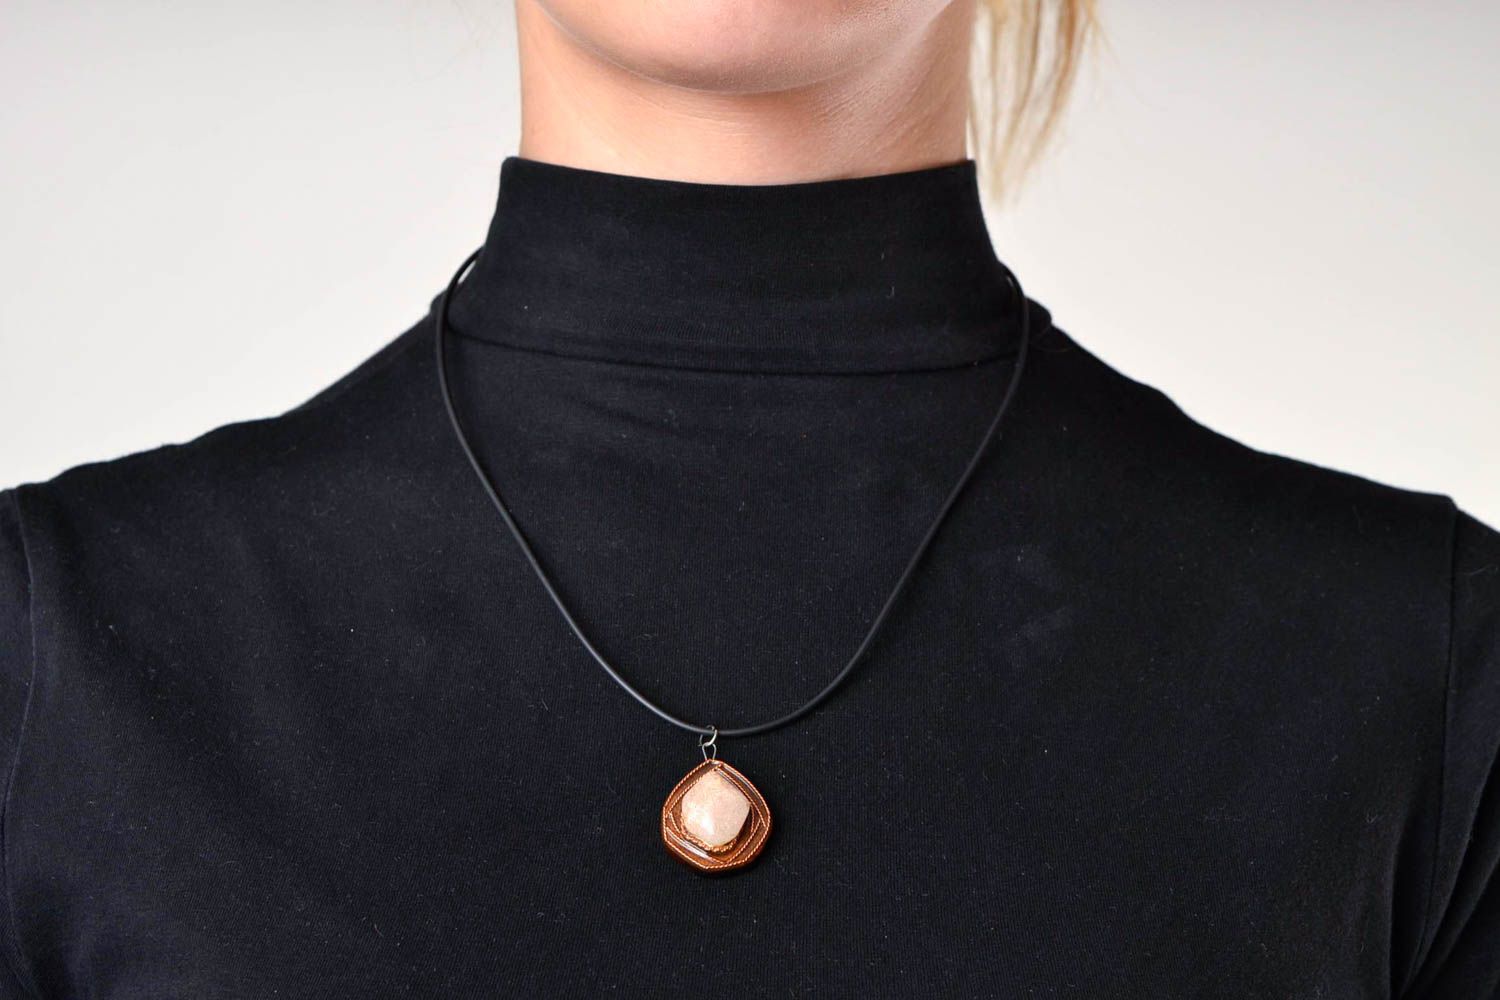 Handmade wooden pendant jewelry with natural stone stylish pendant gift photo 1